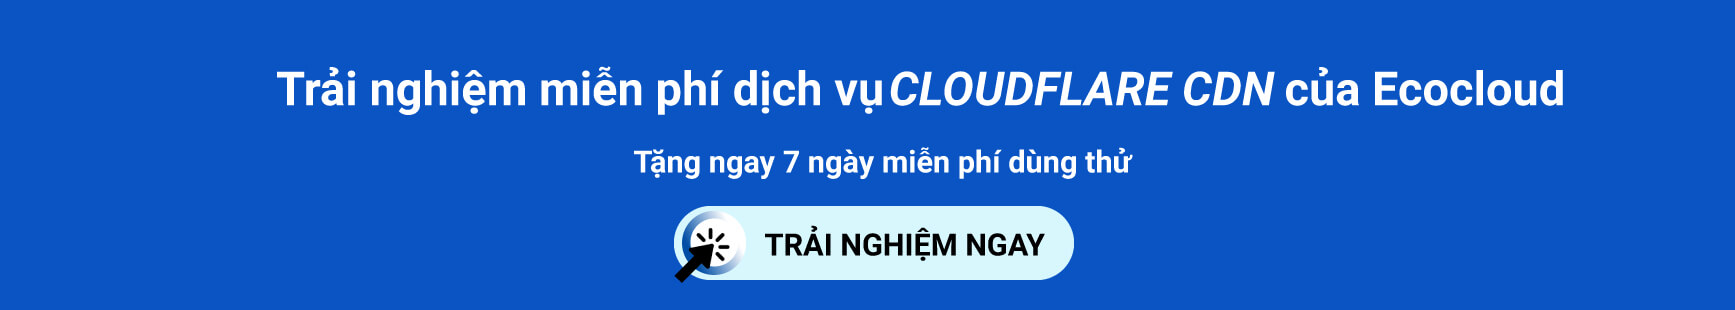 banner-cloudflare cdn